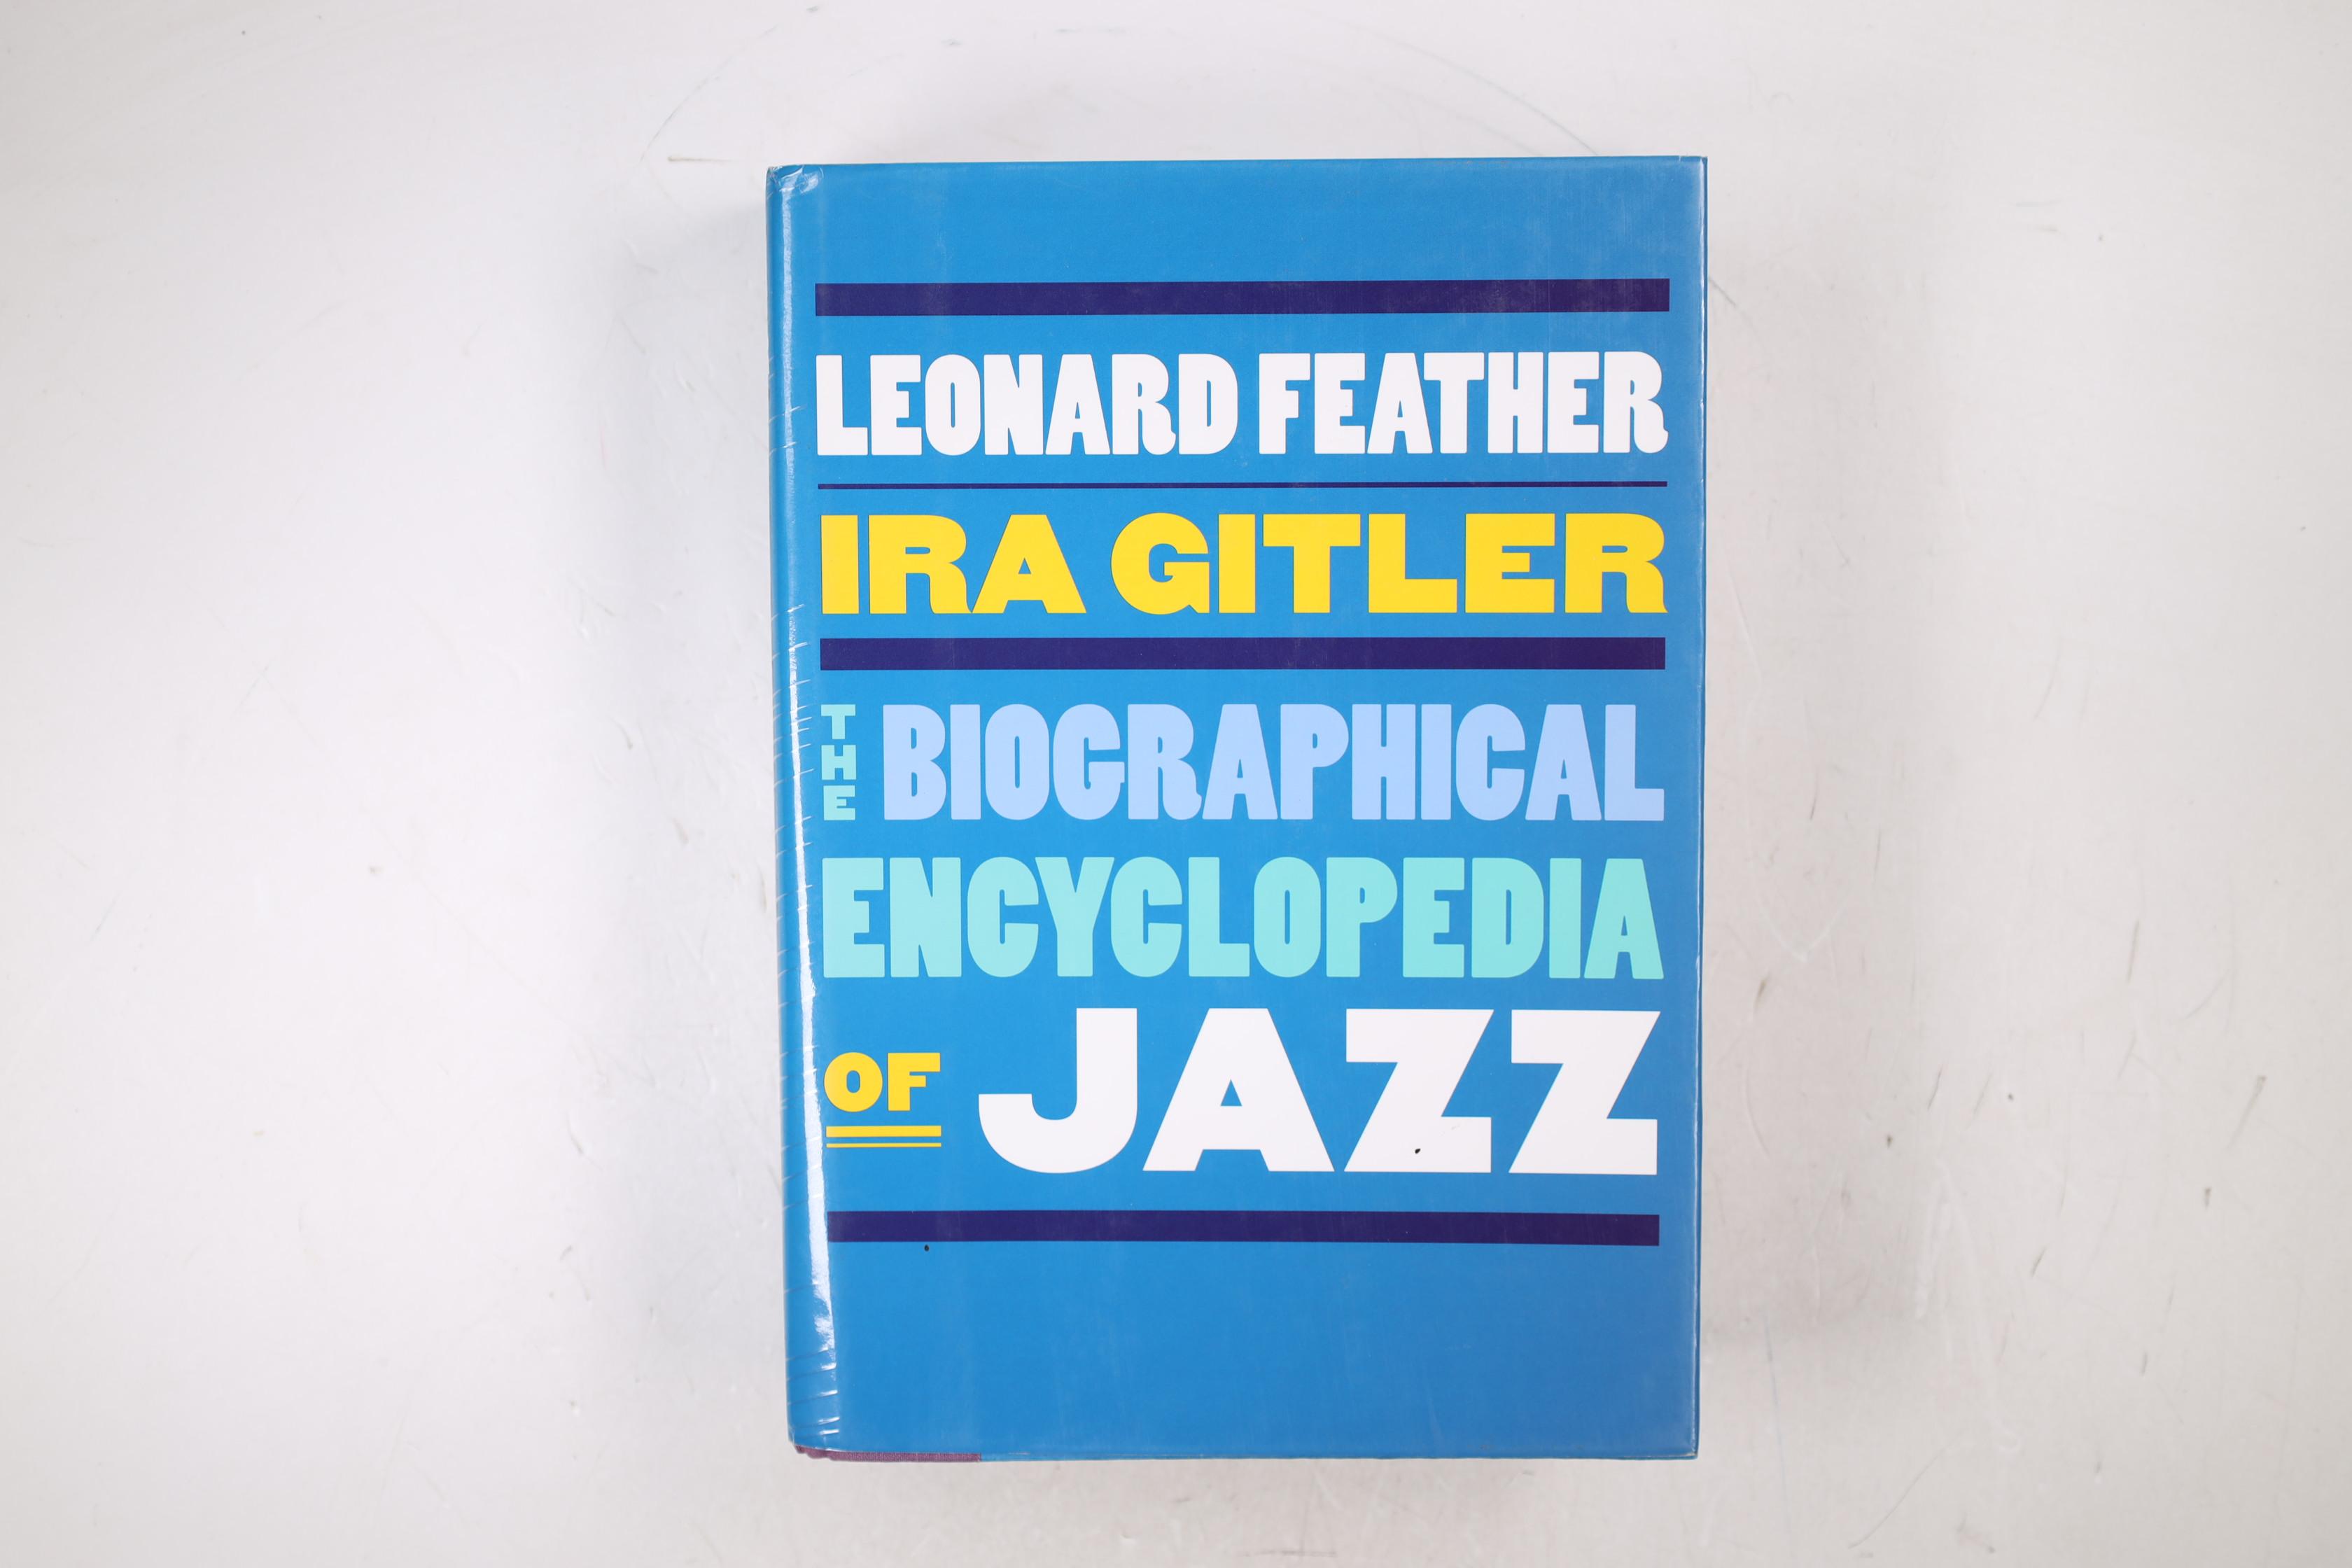 THE BIOGRAPHICAL ENCYCLOPEDIA OF JAZZ. - Feather, Leonard; Gitler, Ira; ;